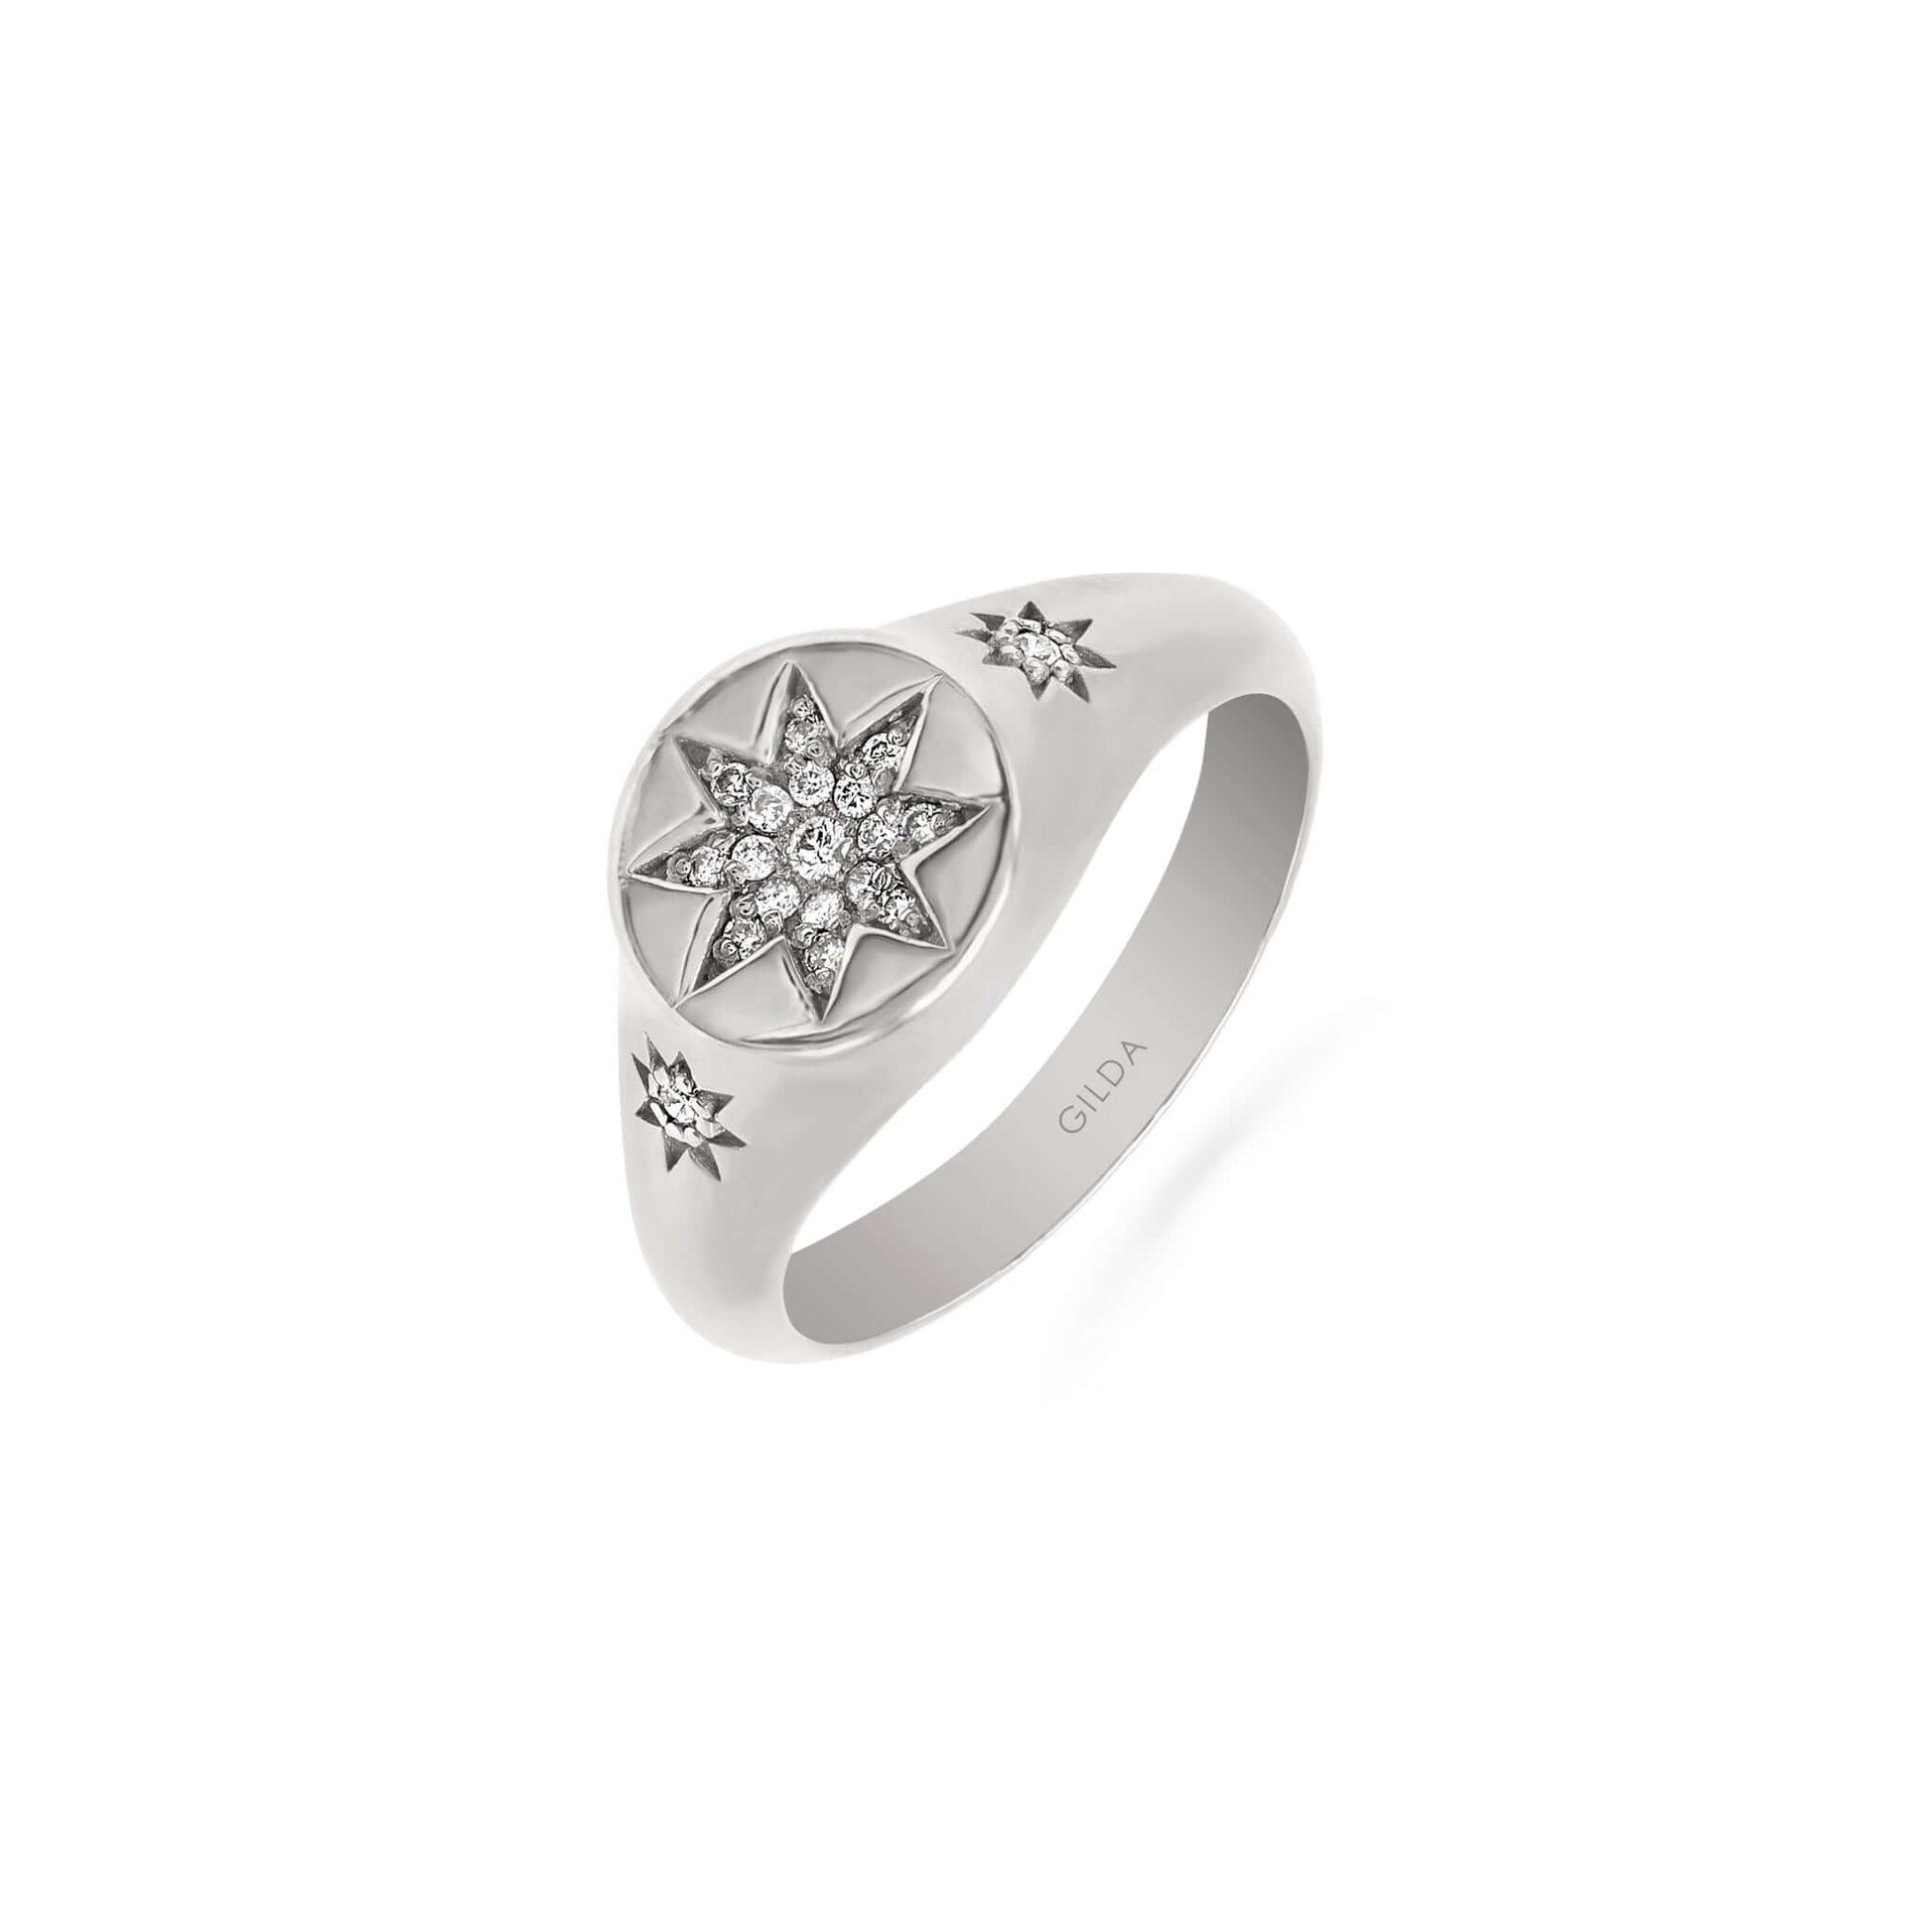 Gilda Jewelry Charming Star | Diamond Ring | 0.08 Cts. | 14K Gold - White / 6 / Diamonds - ring Zengoda Shop online